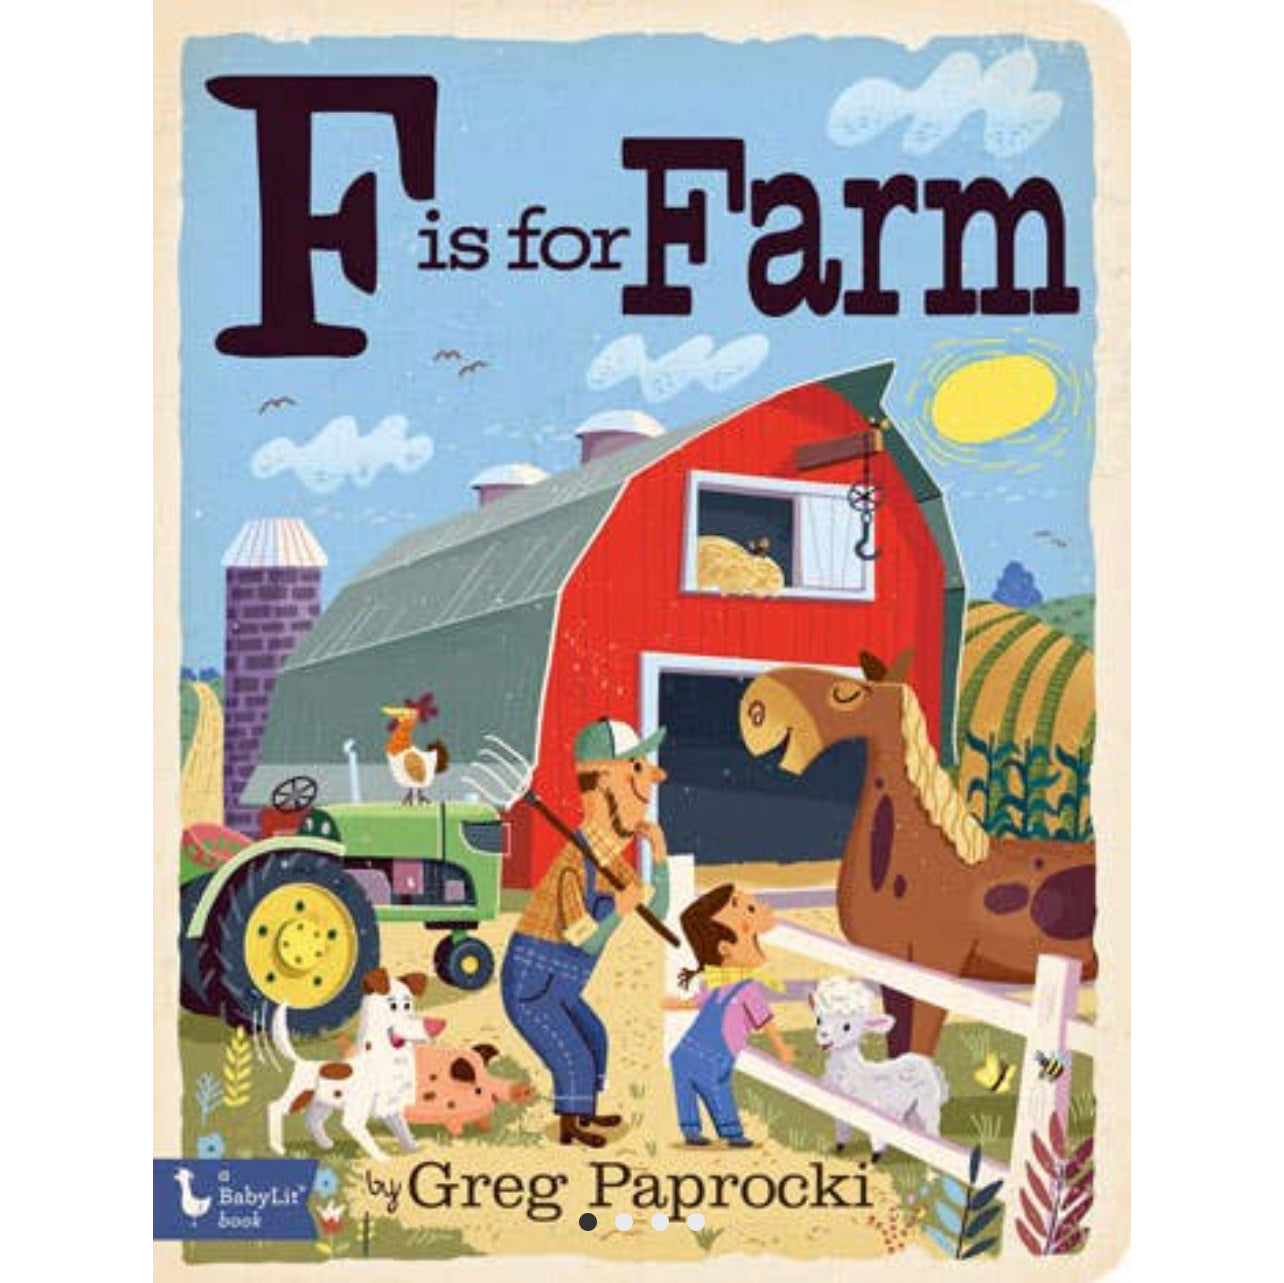 F is for Farm: An Alphabet Board Book